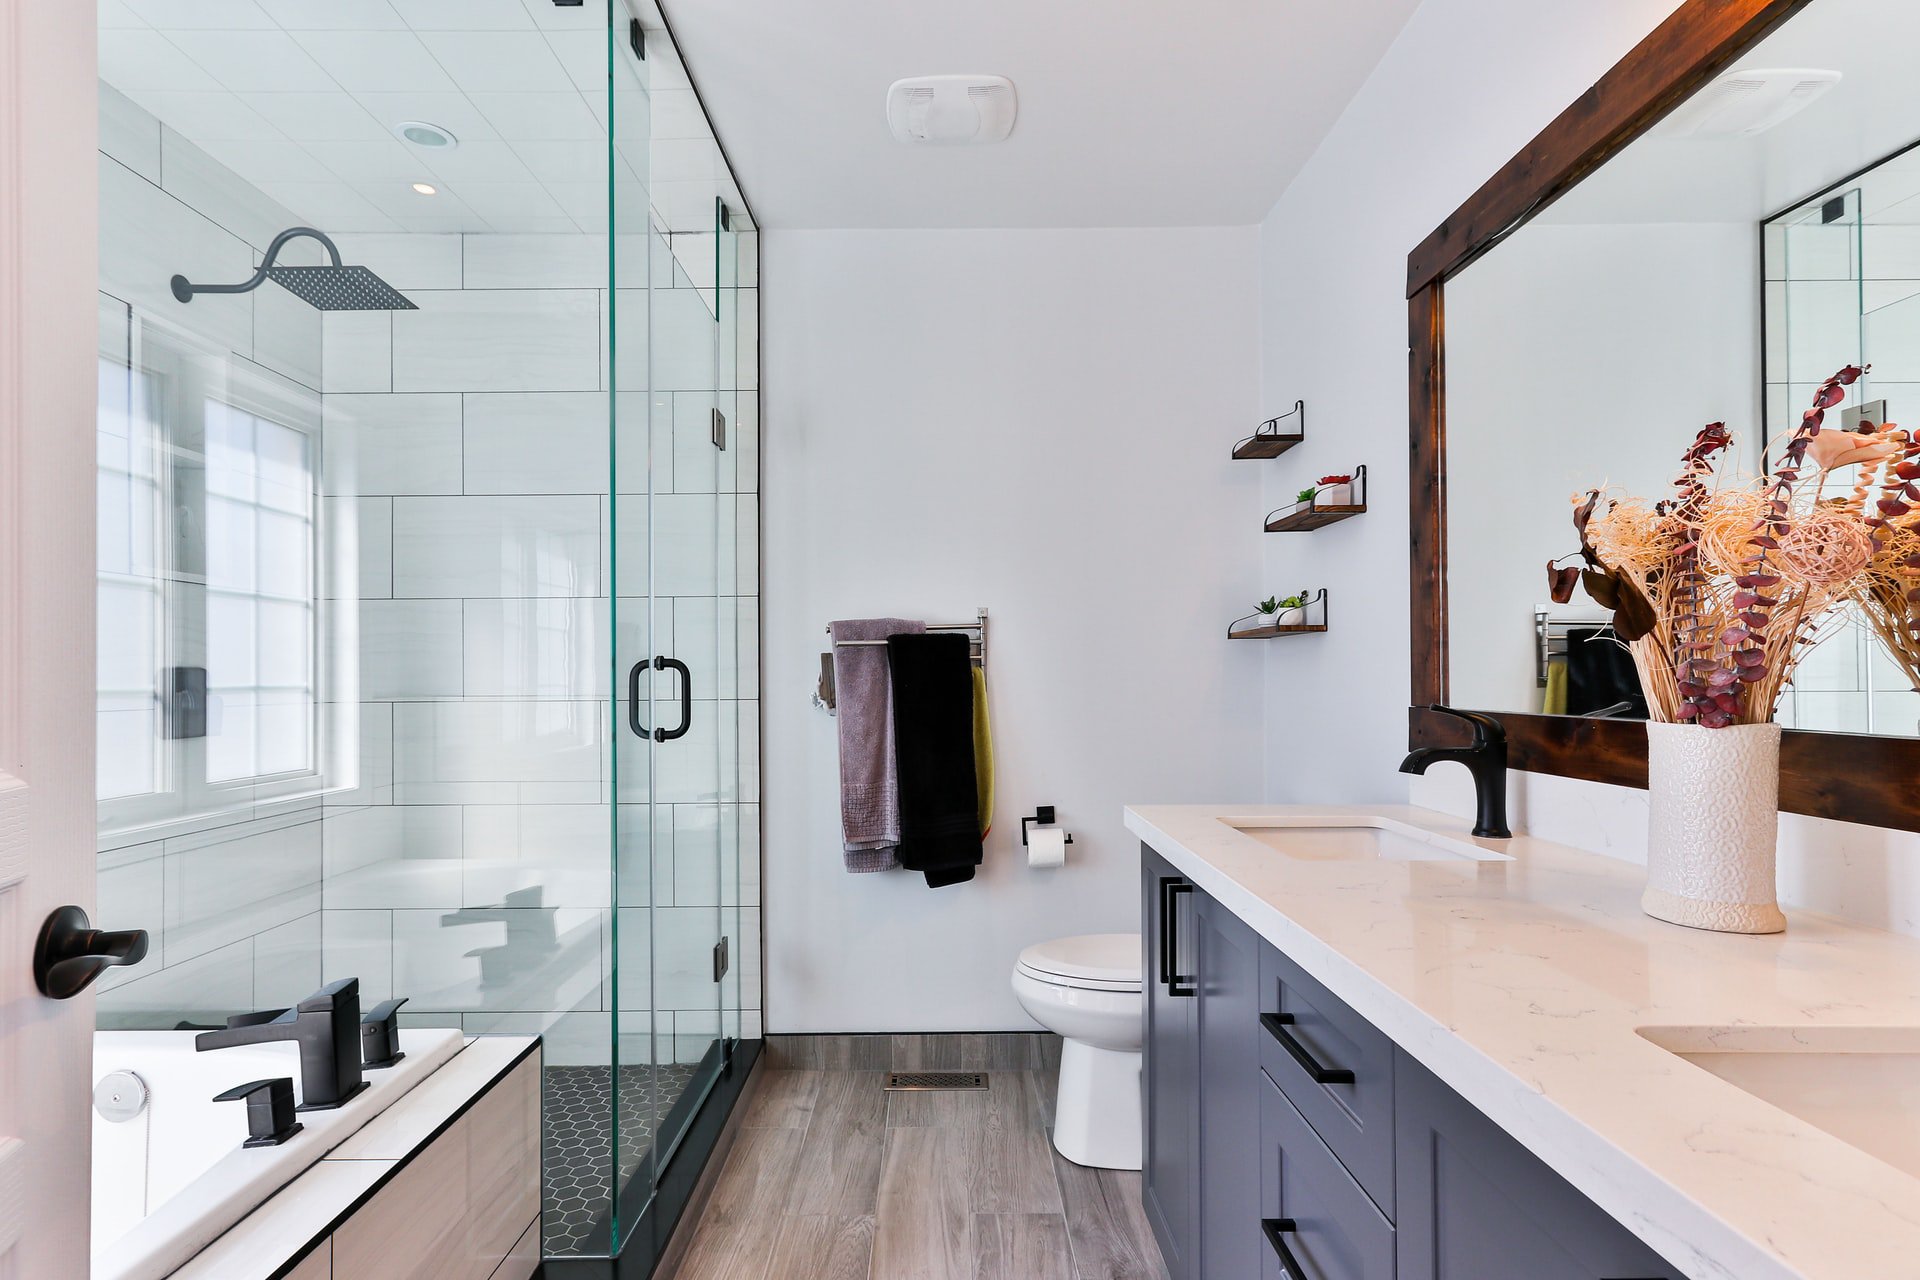  Design a Modern Bathroom with a Tiled Shower